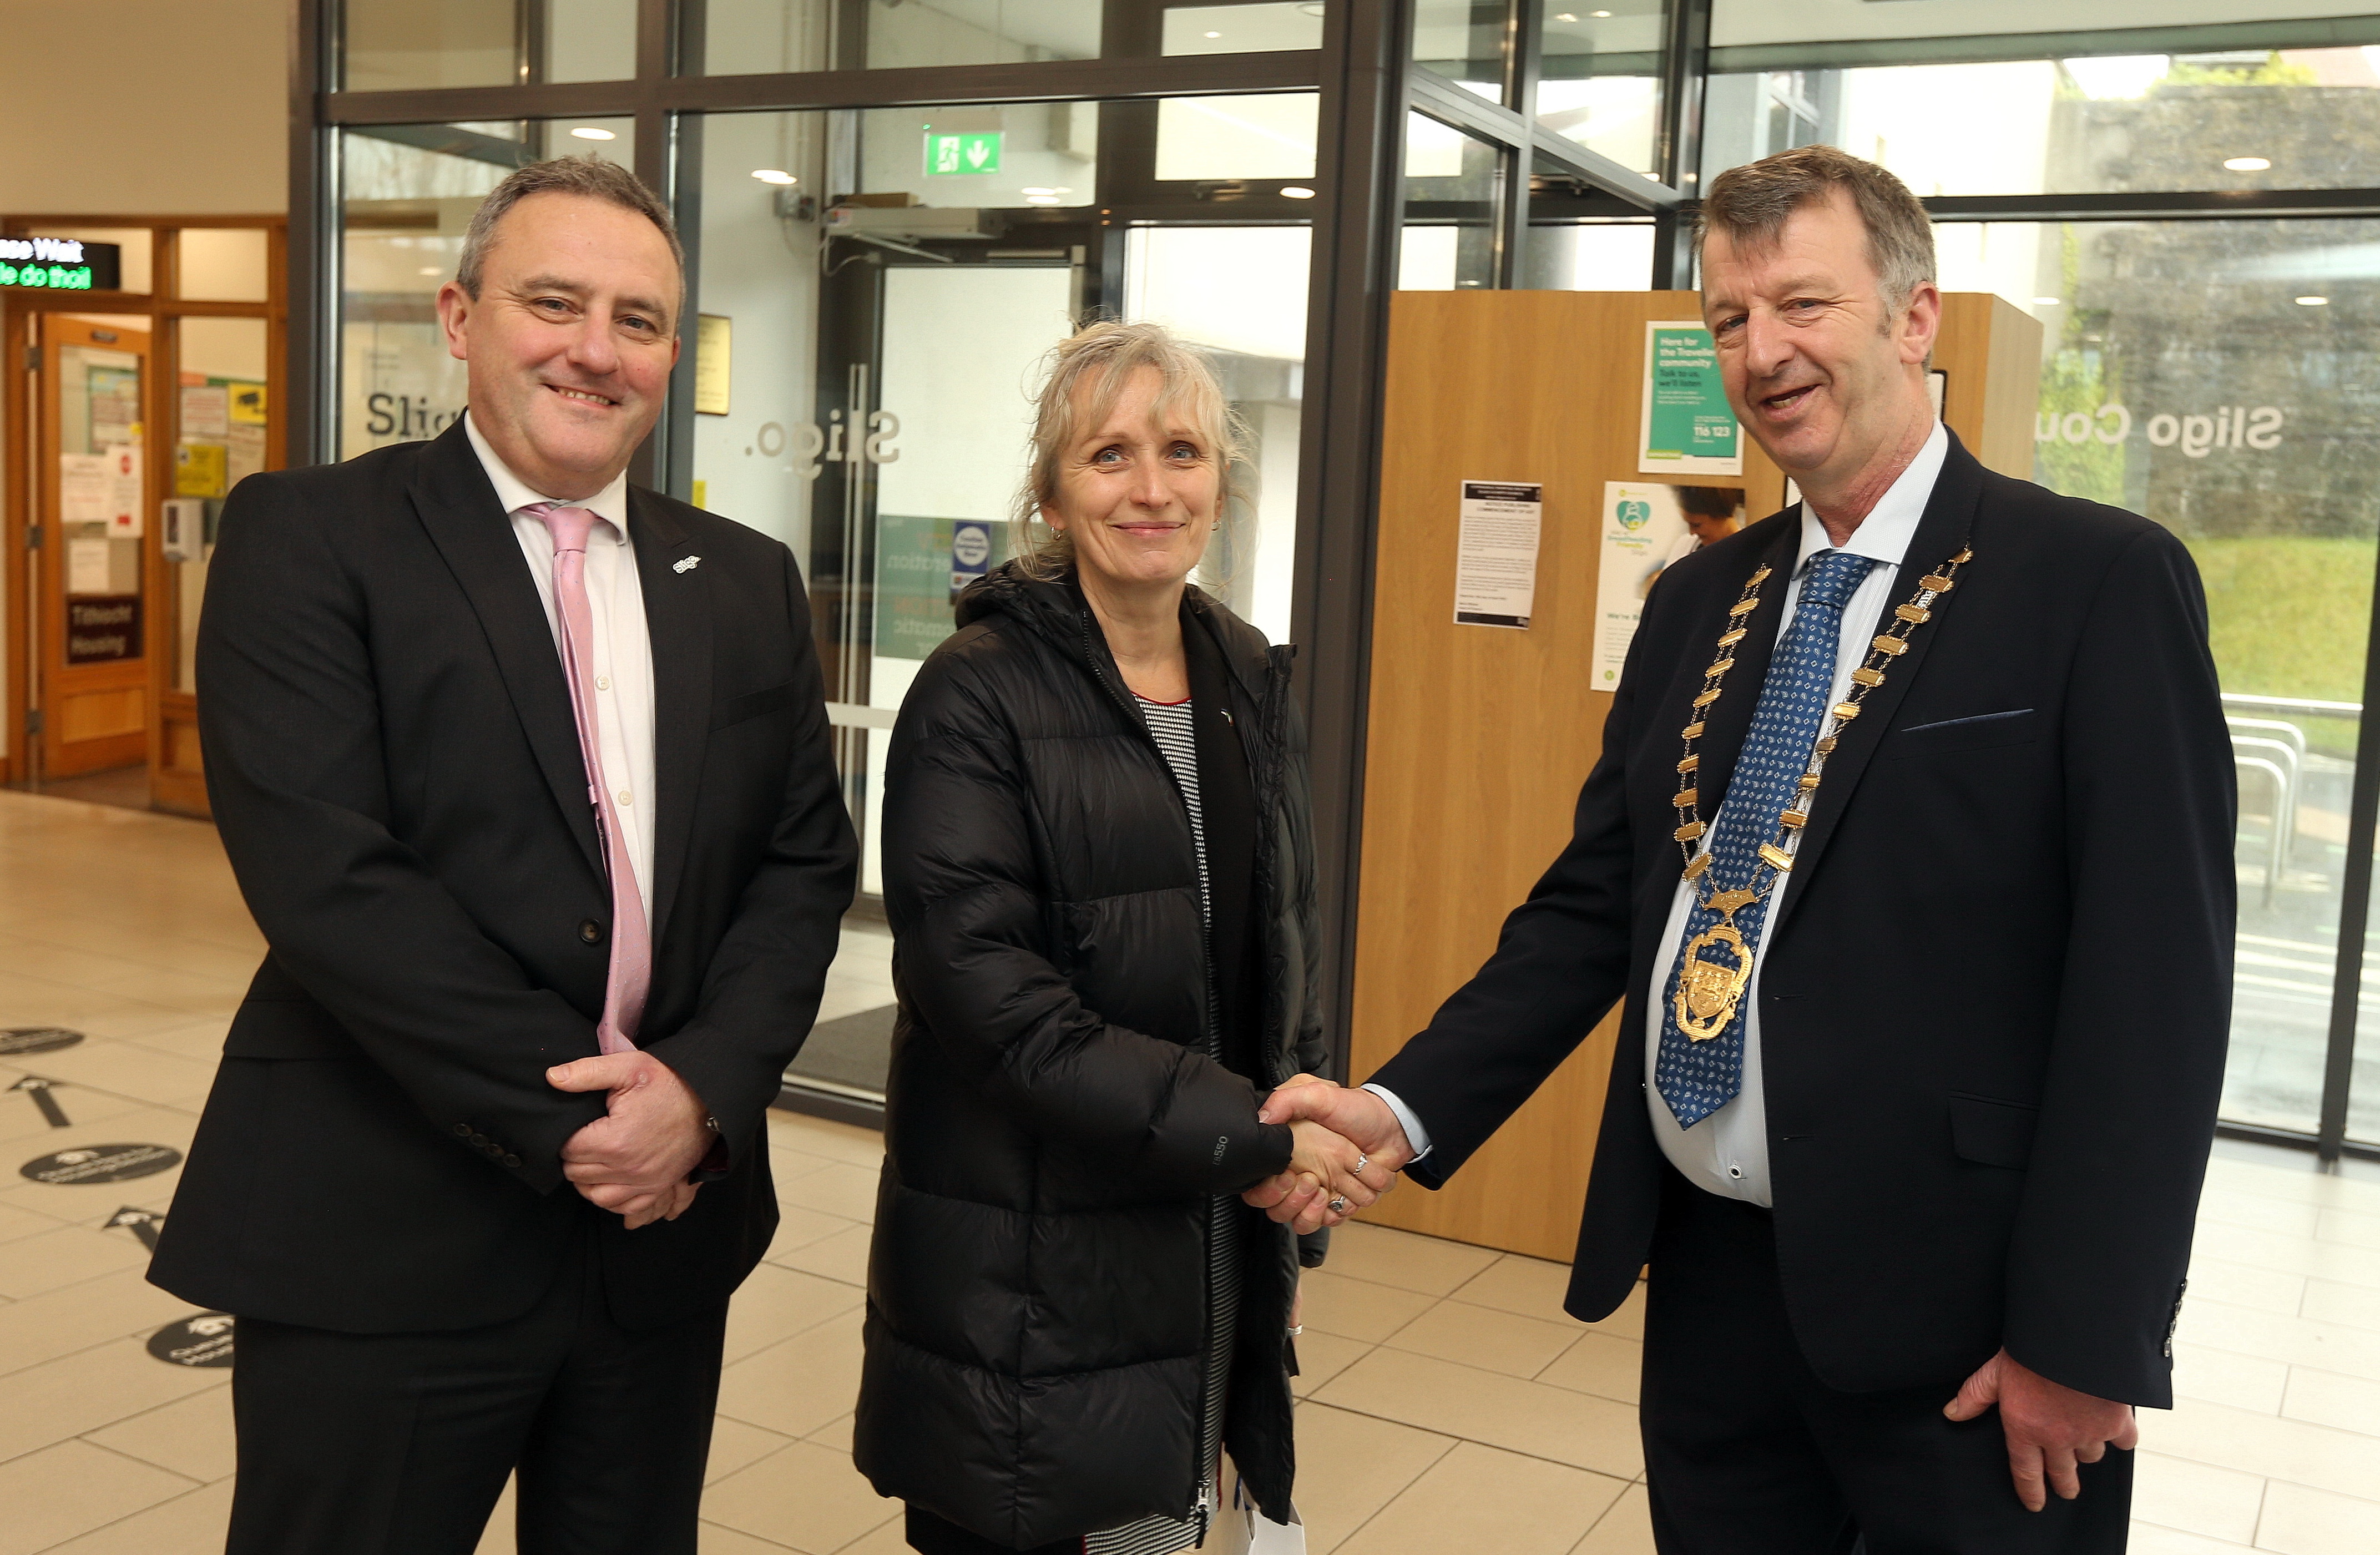 Cathaoirleach welcomes Estonian Ambassador to County Hall